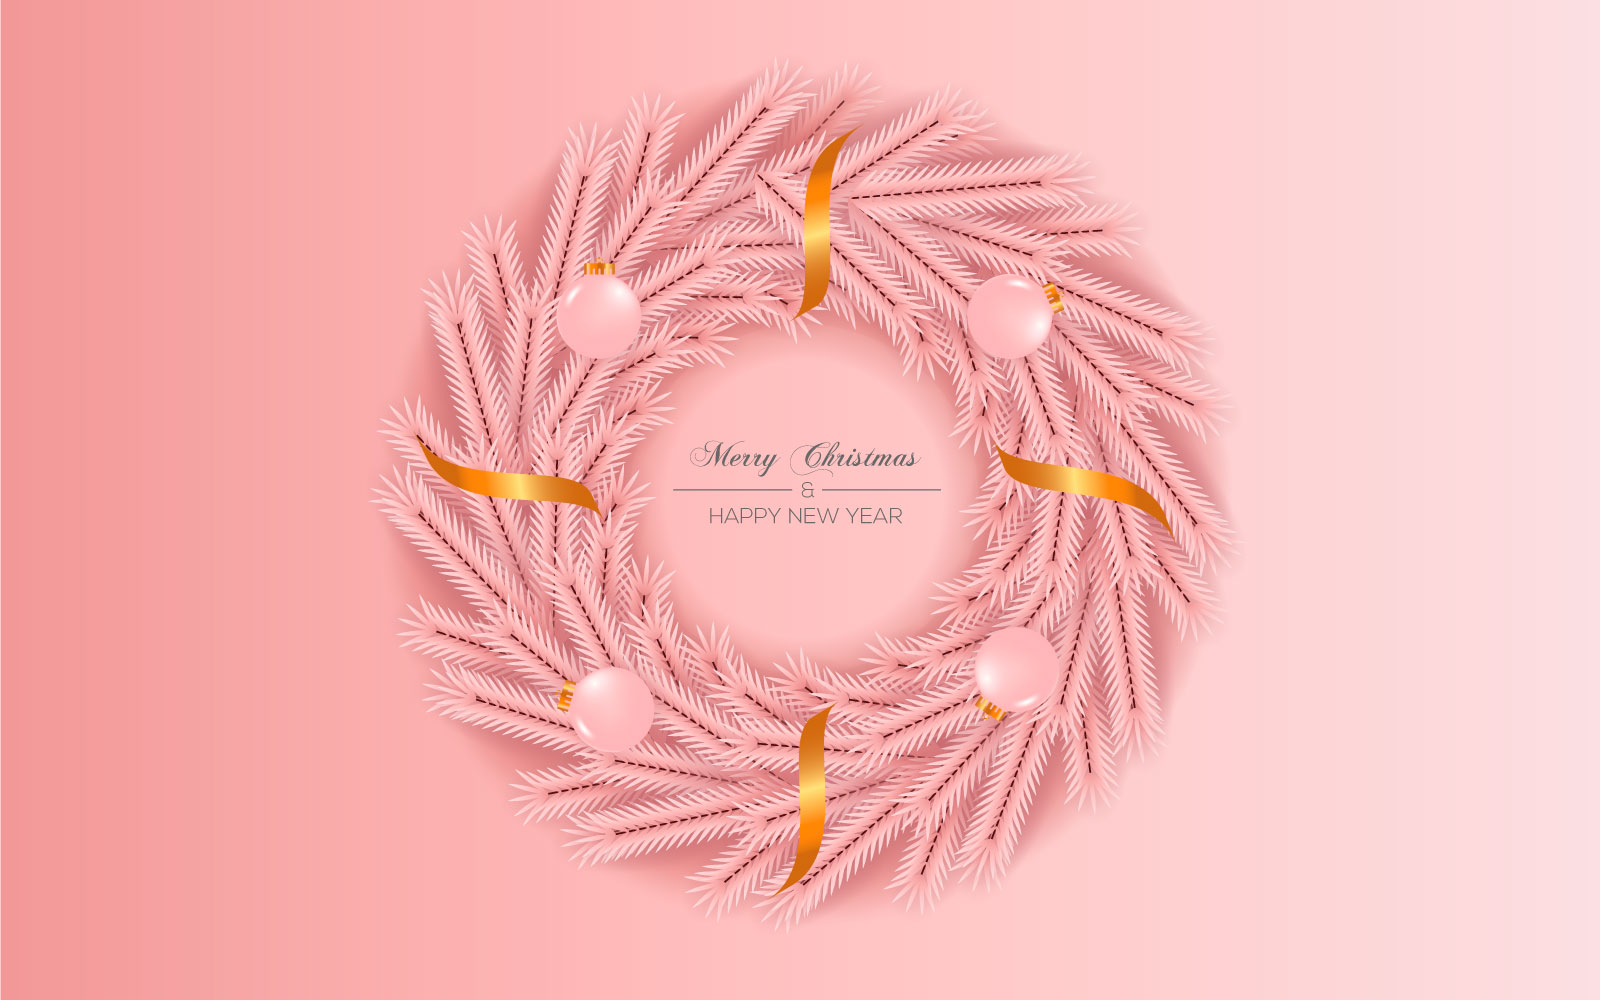 Christmas wreath vector concept design. merry christmas text in grass wreath element